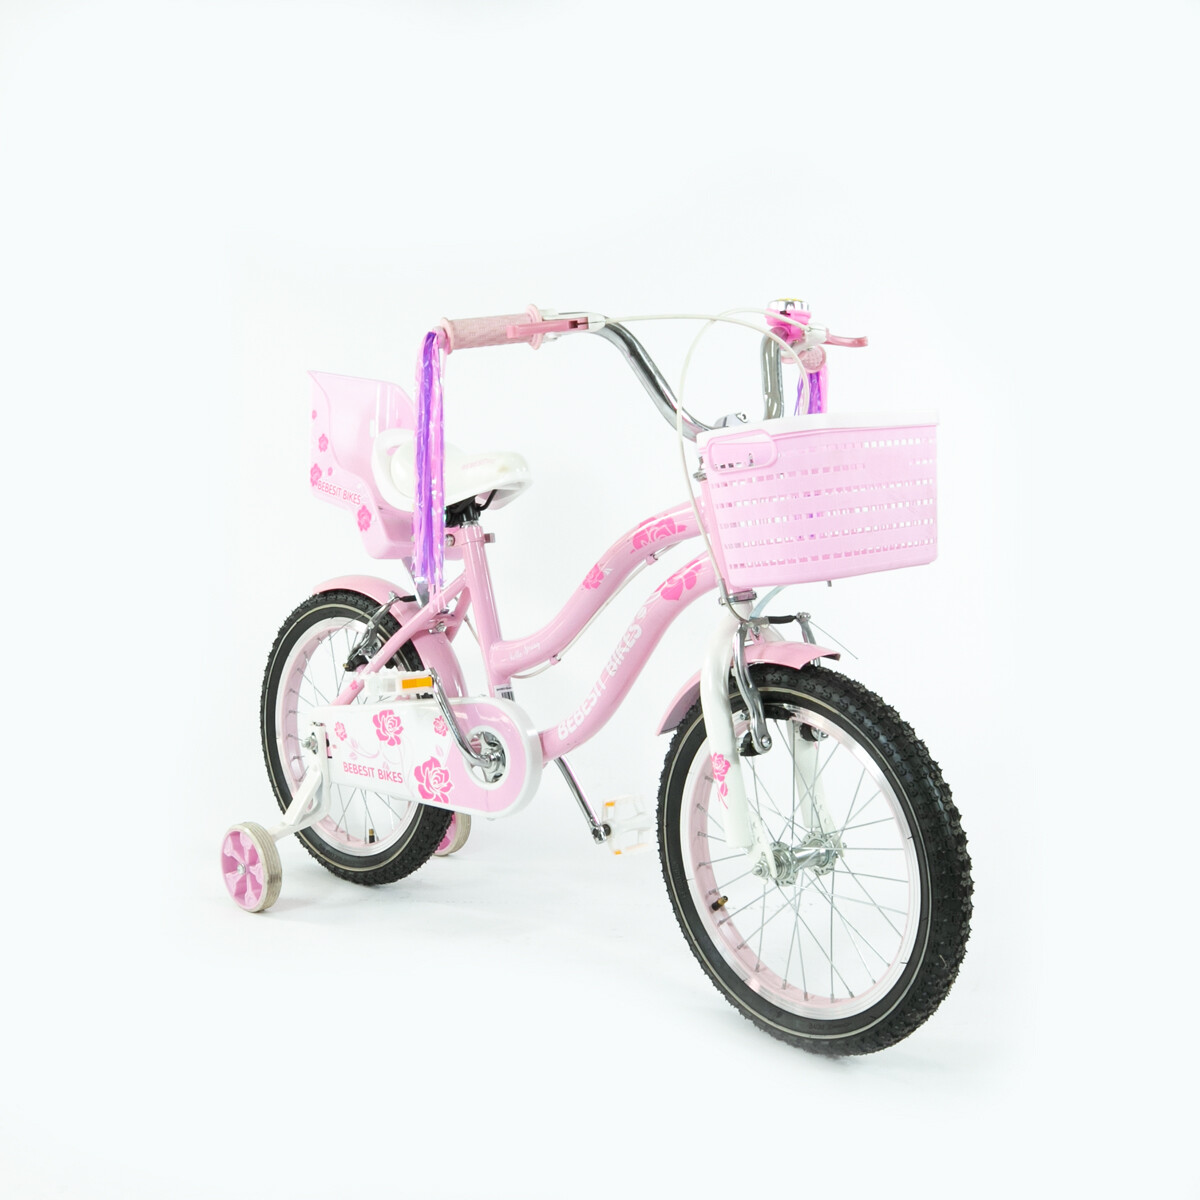 Bicicleta rodado 16 Queen Bebesit - Rosa 